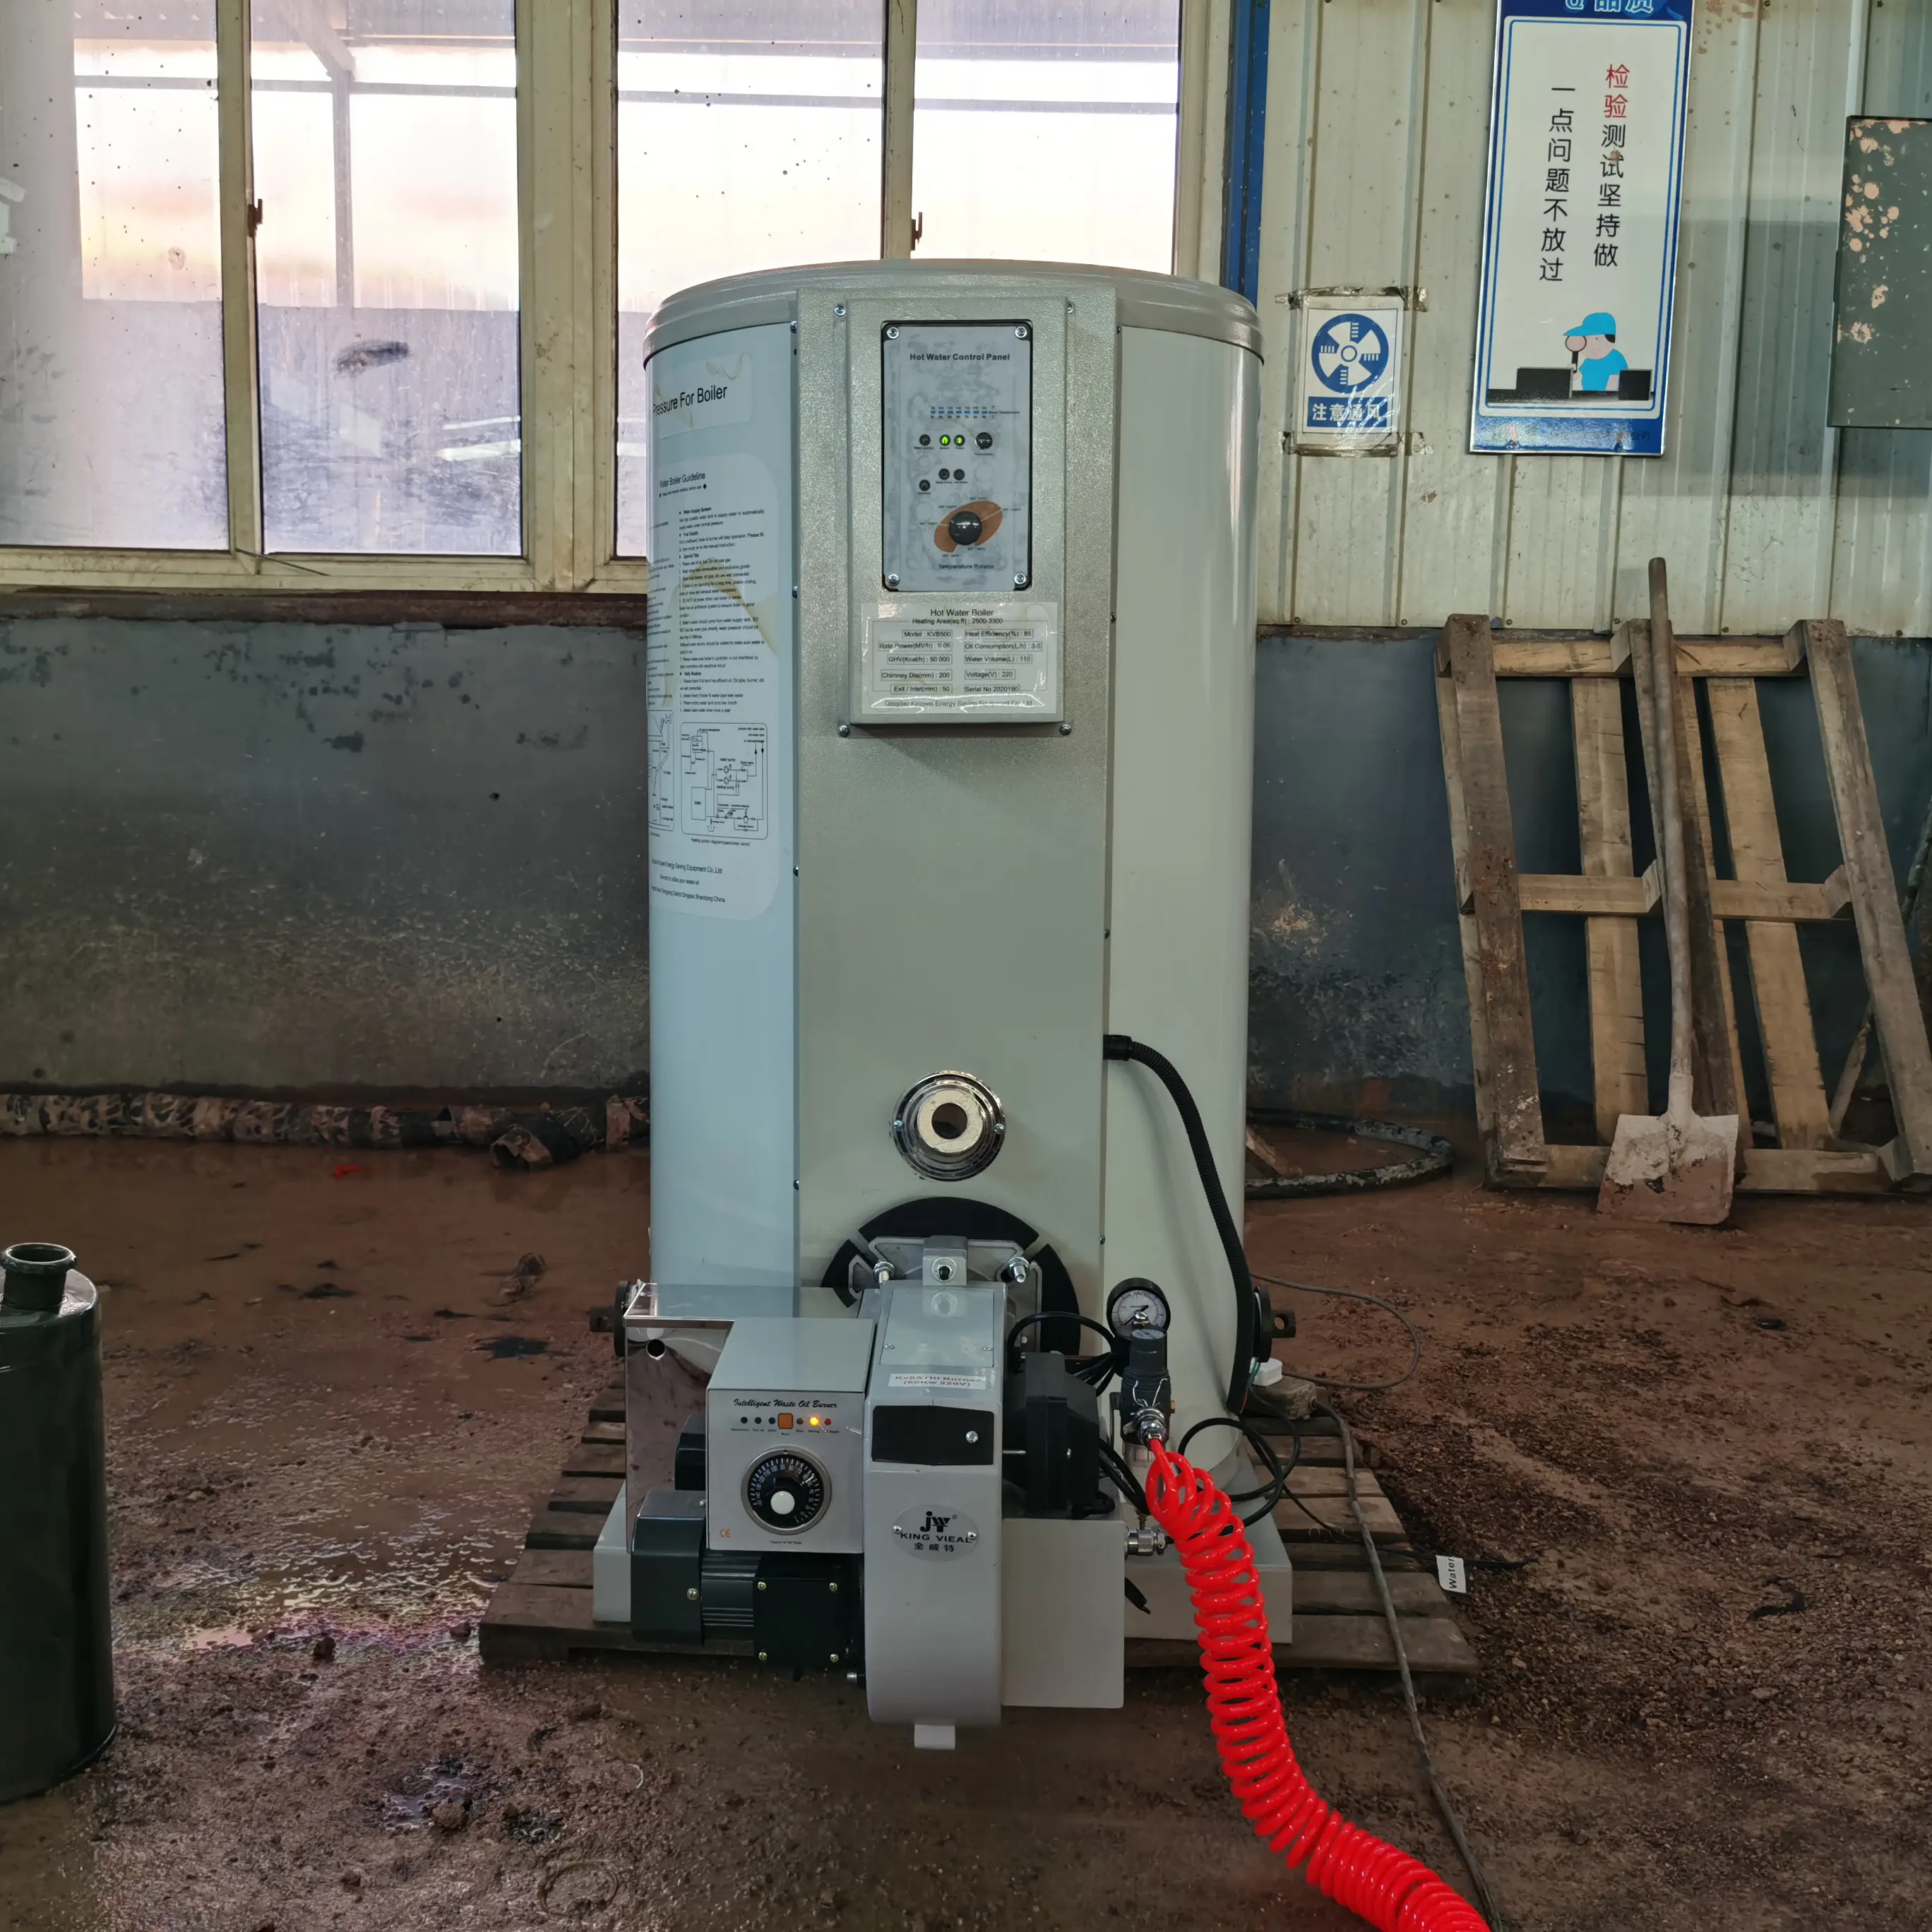 Durable Waste Oil Fired Hot Water Boiler For Heating Floor Radiator